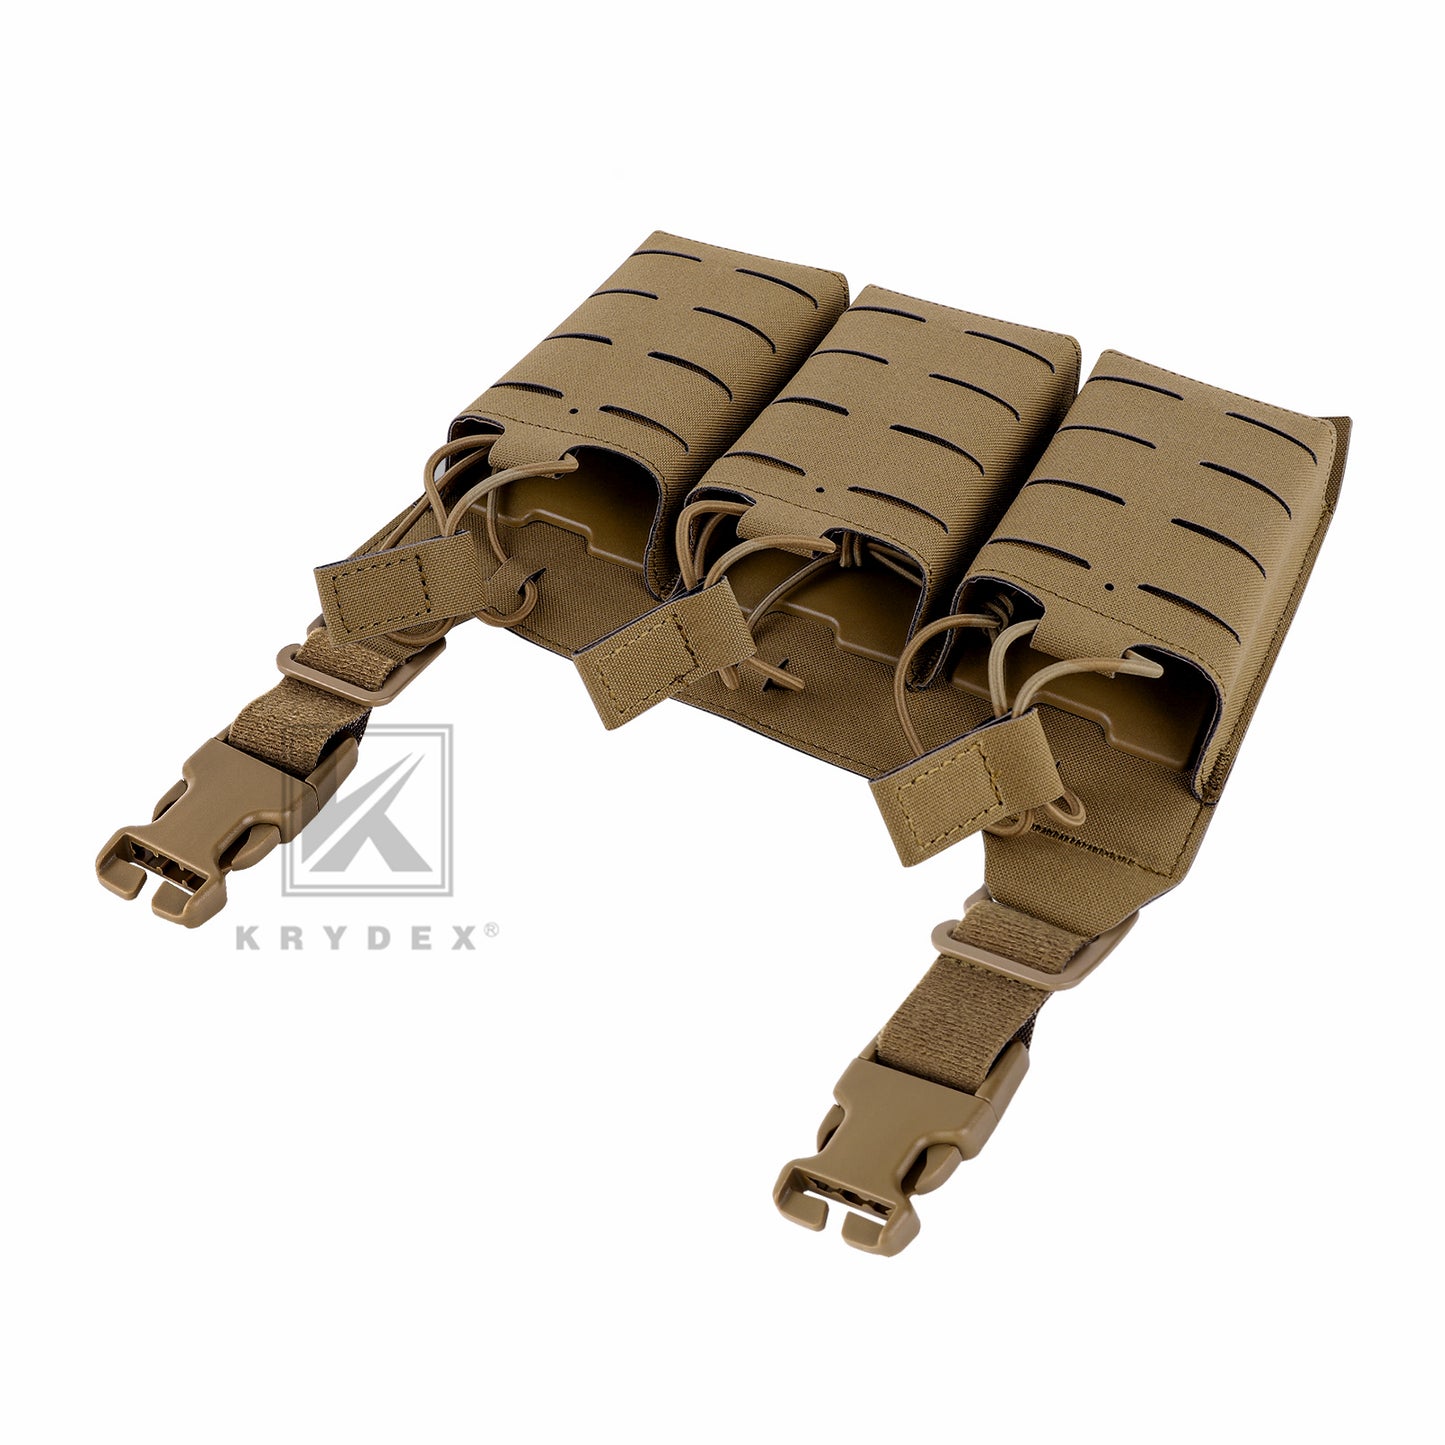 Krydex Tactical KTAR Front Flap 5.56 Triple Magazine Pouch for Tactical Vest Plate Carrier